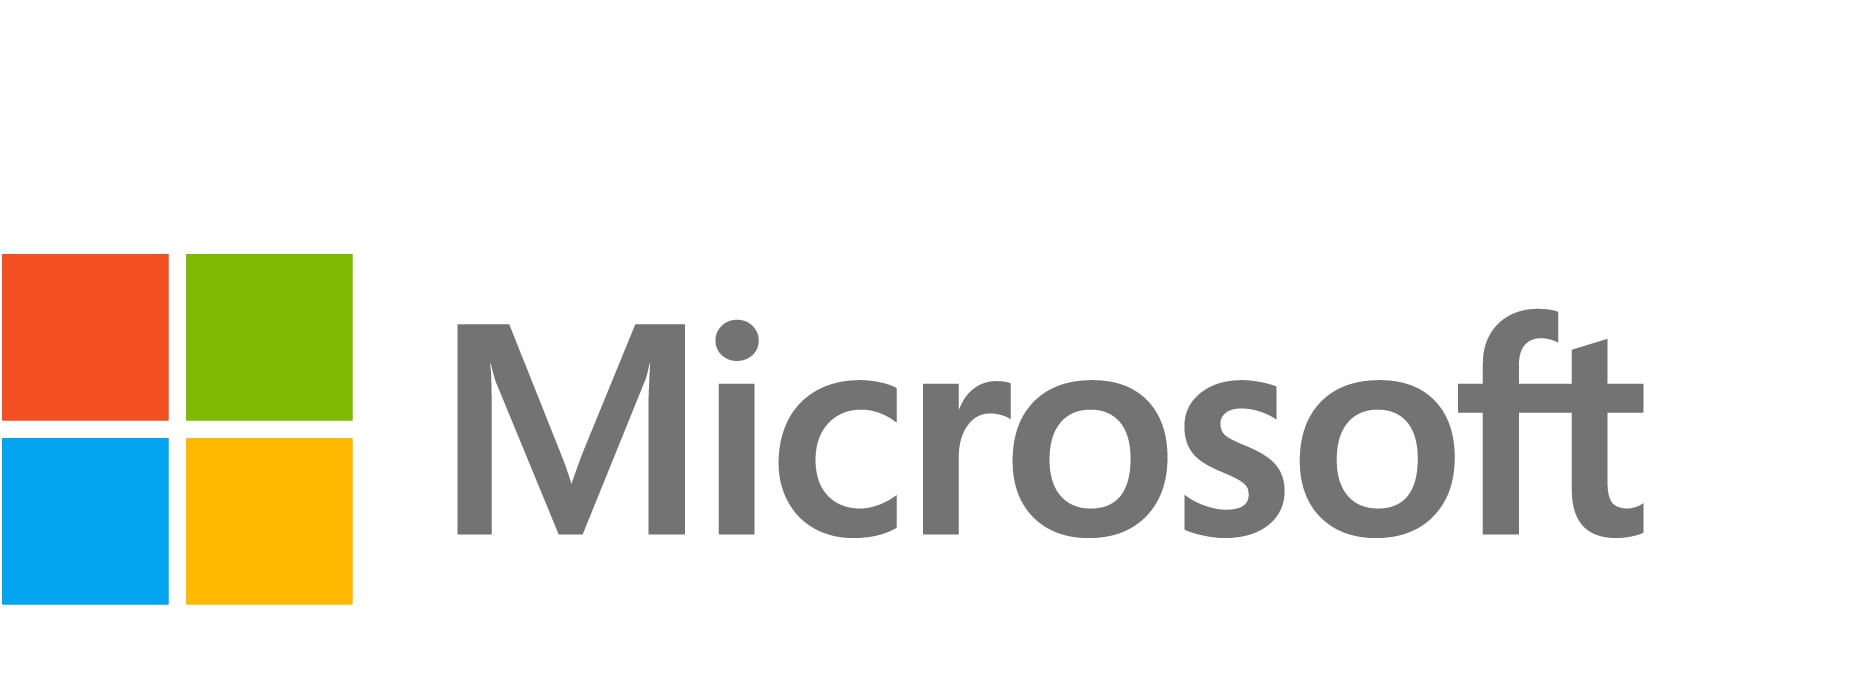 Microsoft Office 365 E5 - subscription license (1 year) - 1 license